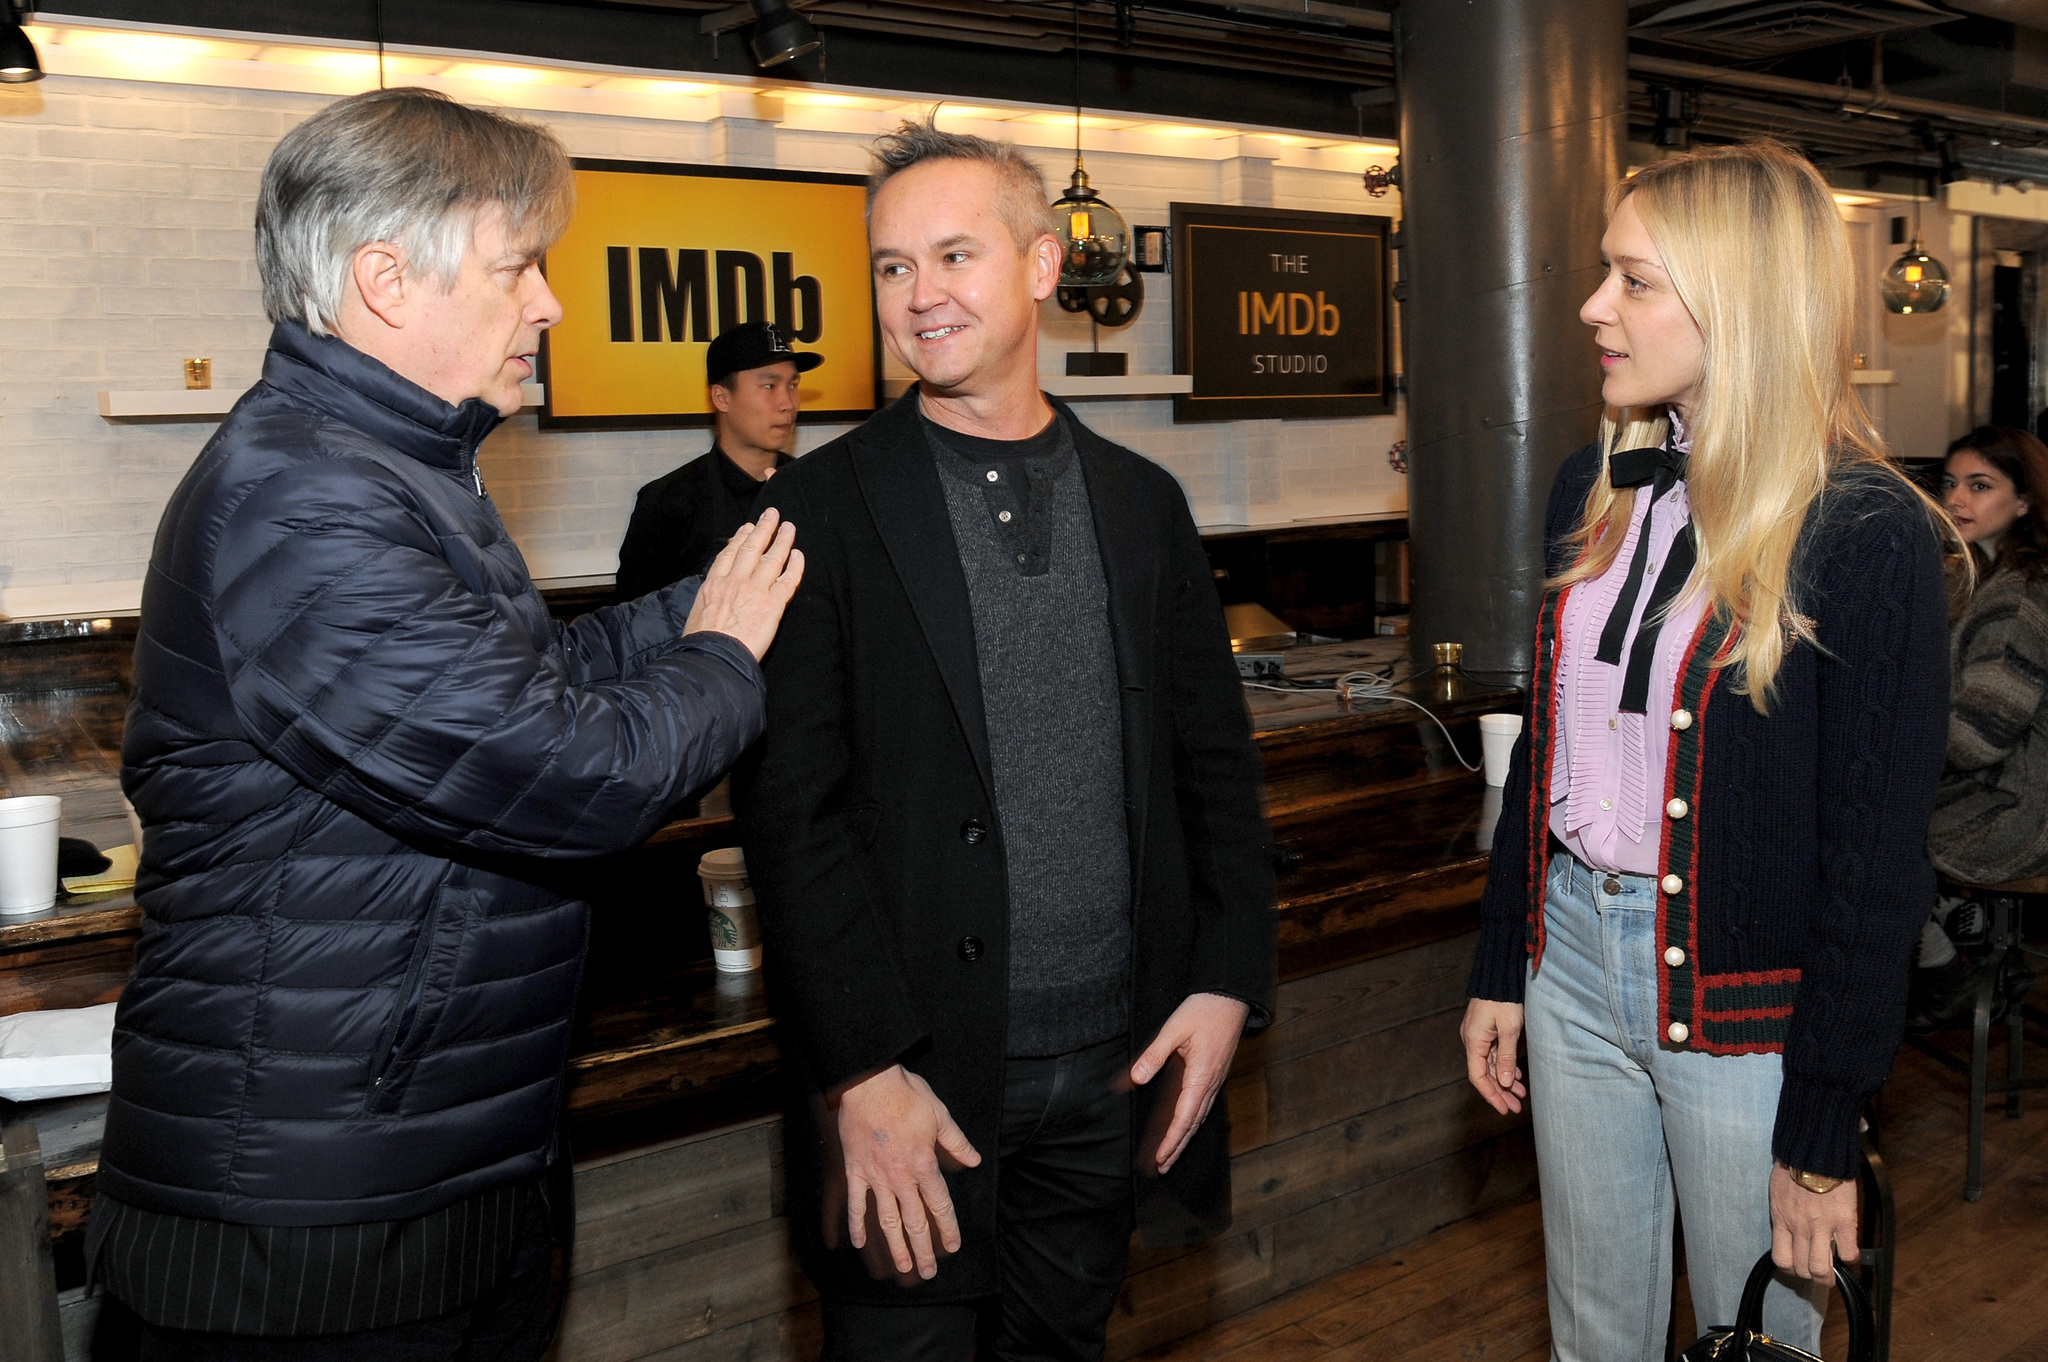 Chloë Sevigny, Whit Stillman and Roy Price at event of The IMDb Studio (2015)